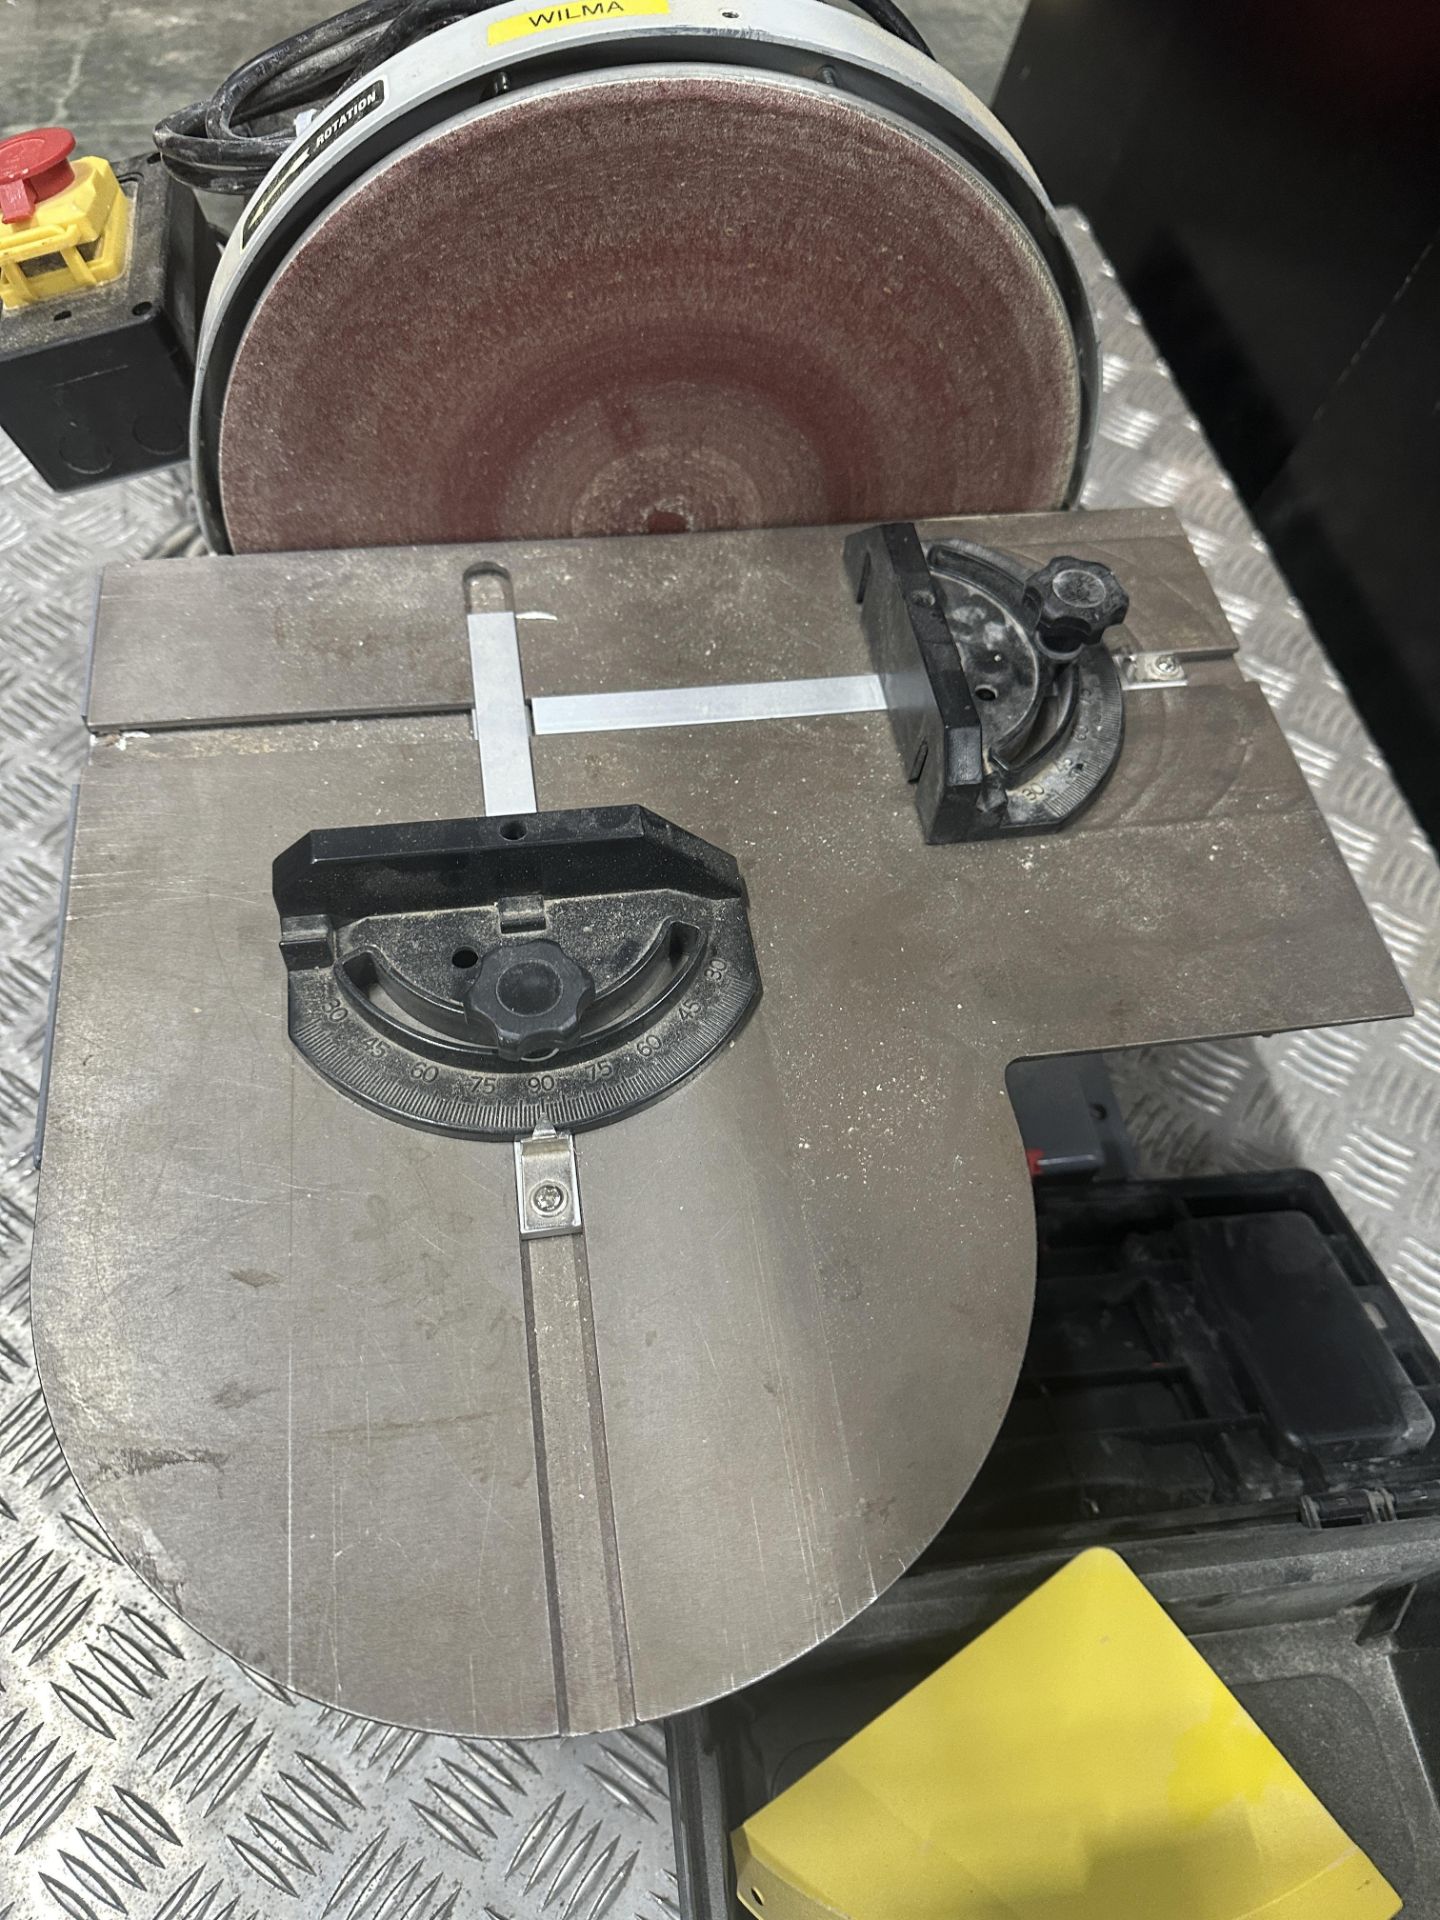 Axminster disc sander - Bild 3 aus 3